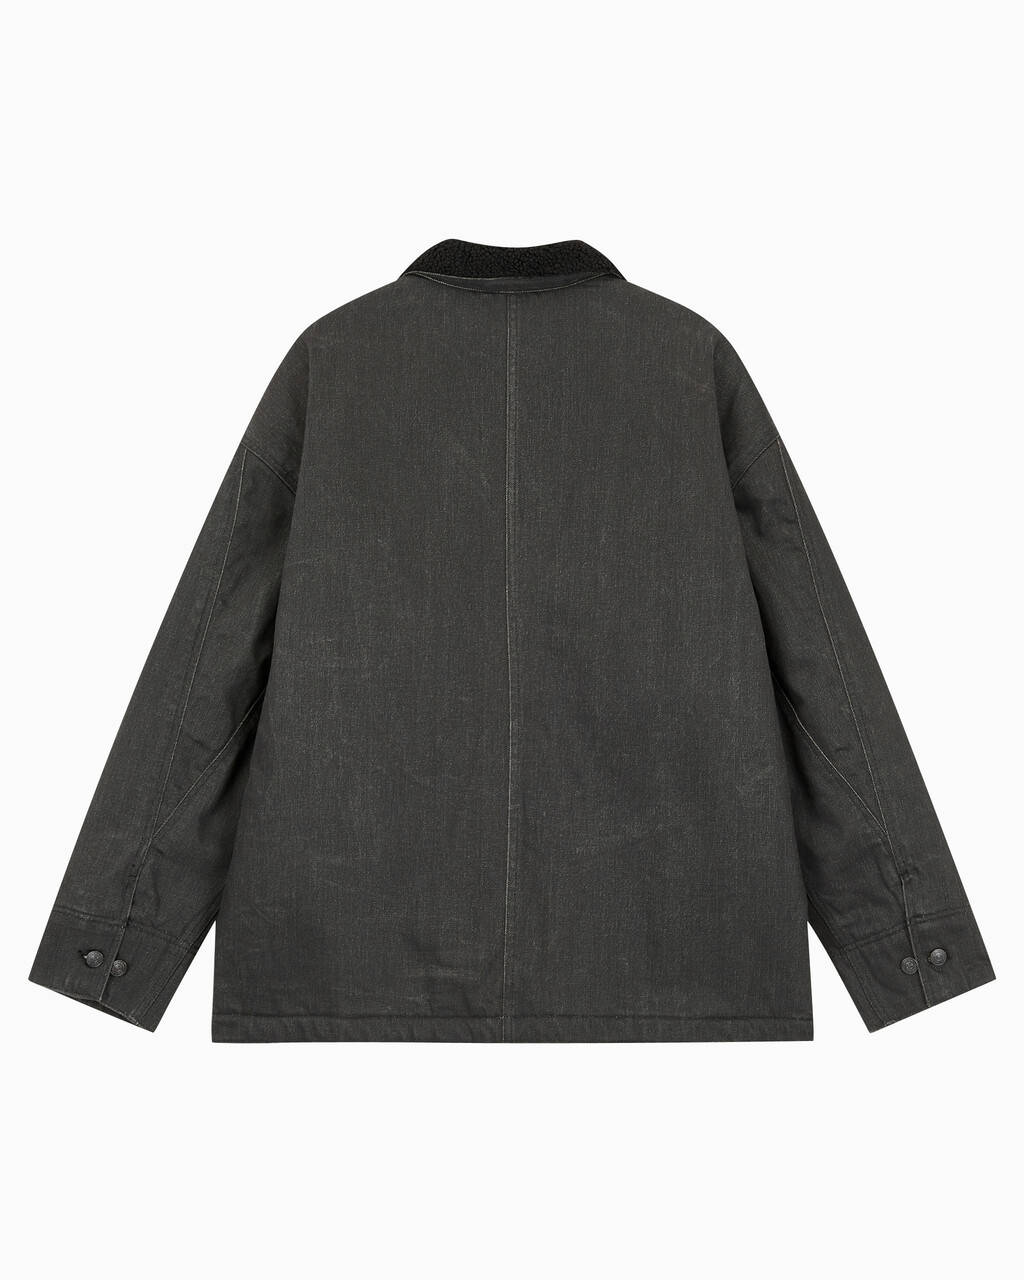 Buy 남성 쉐르파 숏 코트 자켓 in color BLACK